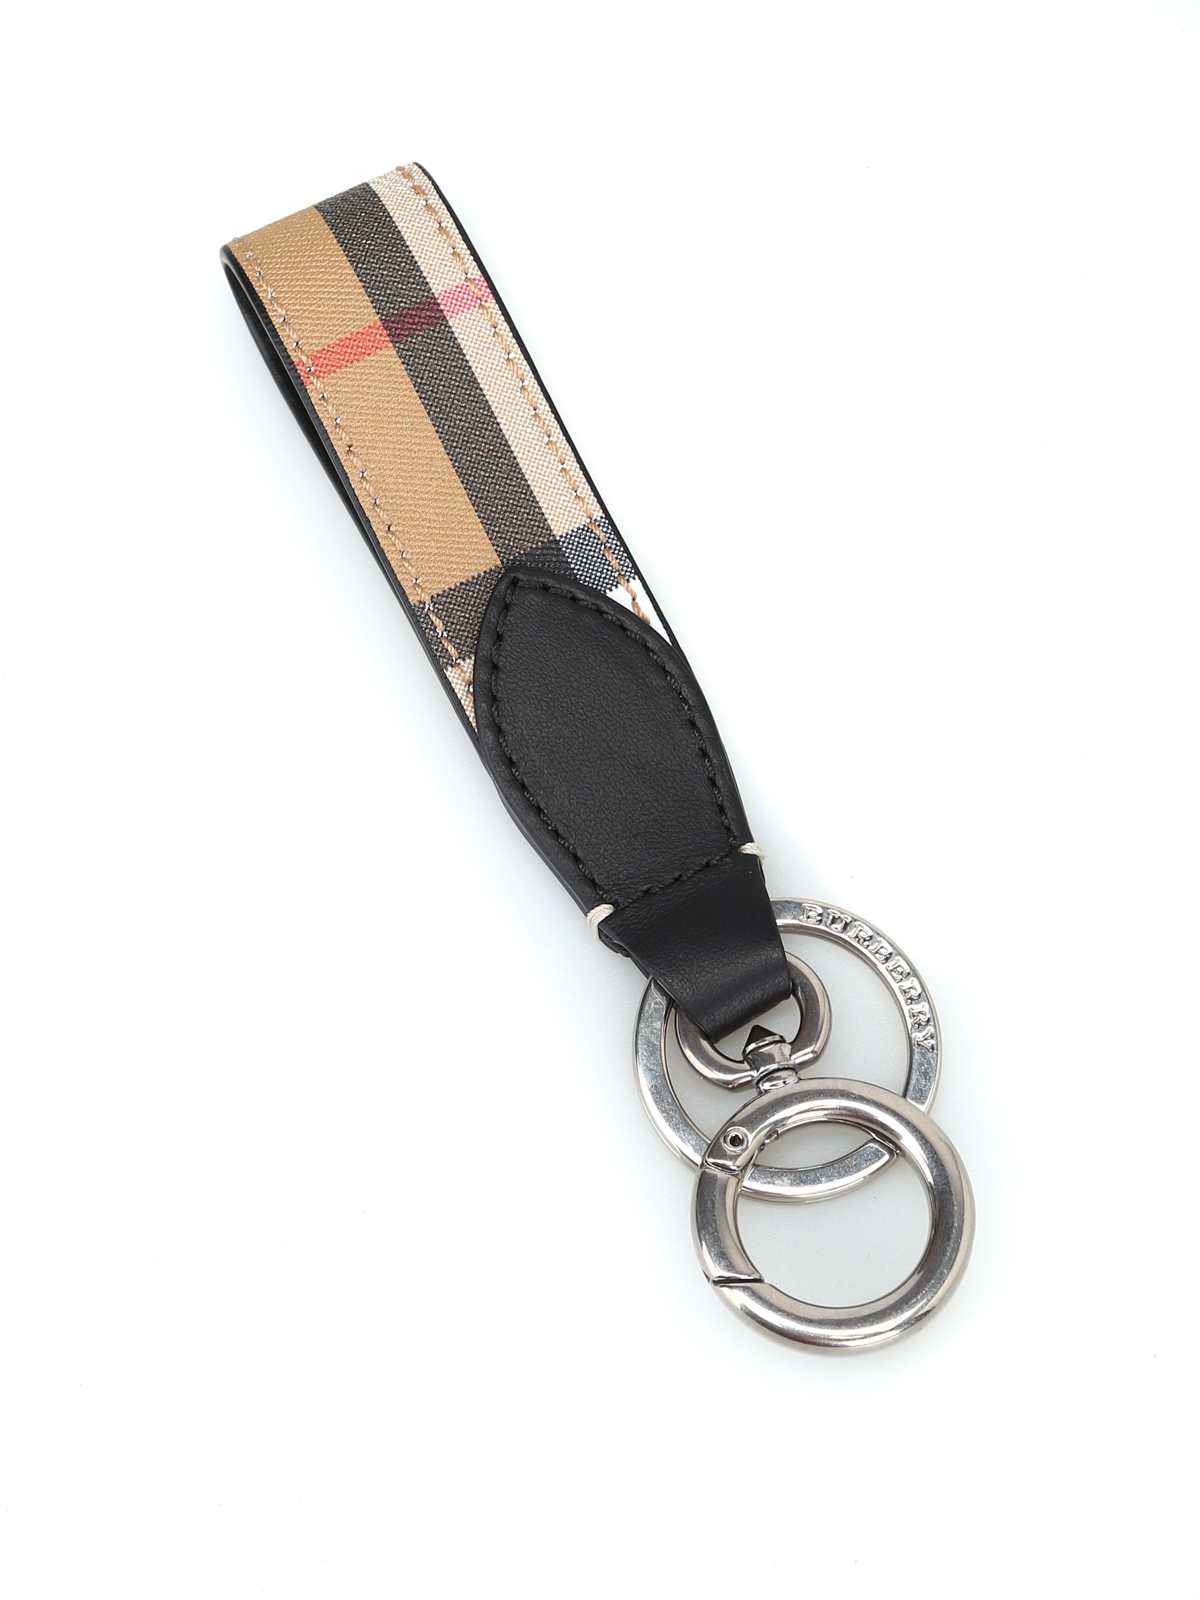 burberry leather keychain